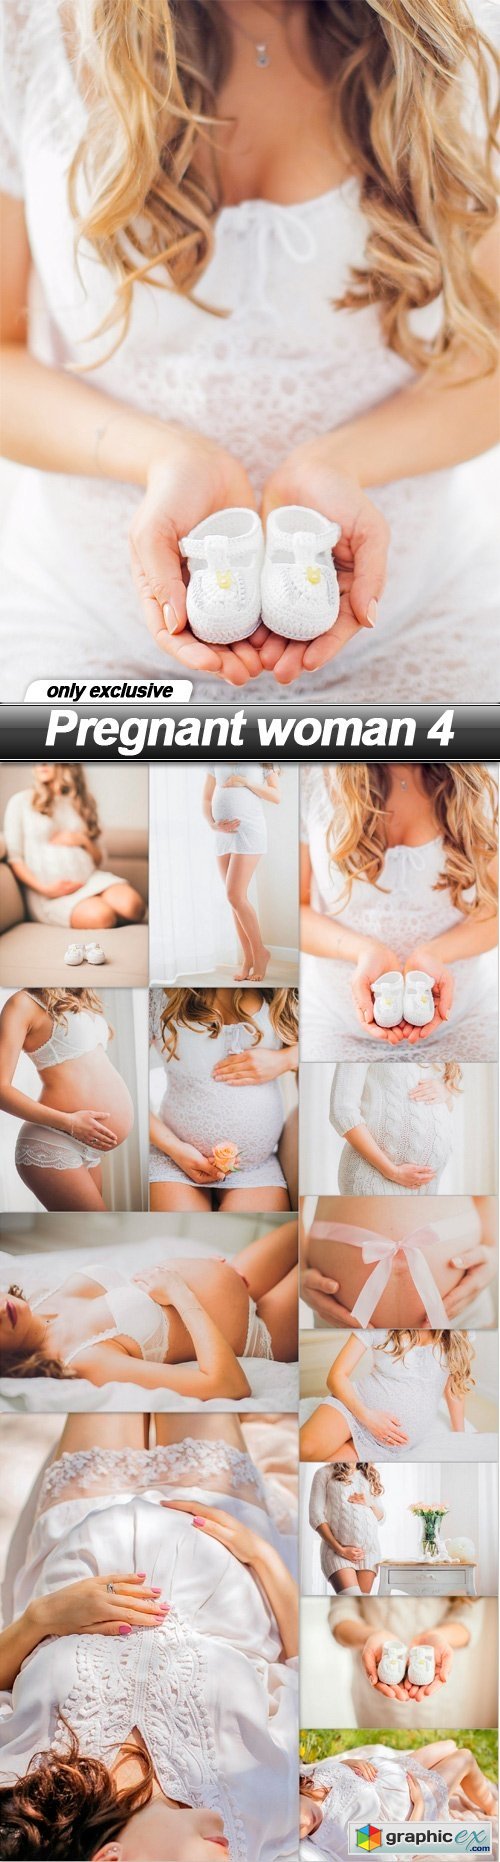 Pregnant woman 4 - 13 UHQ JPEG